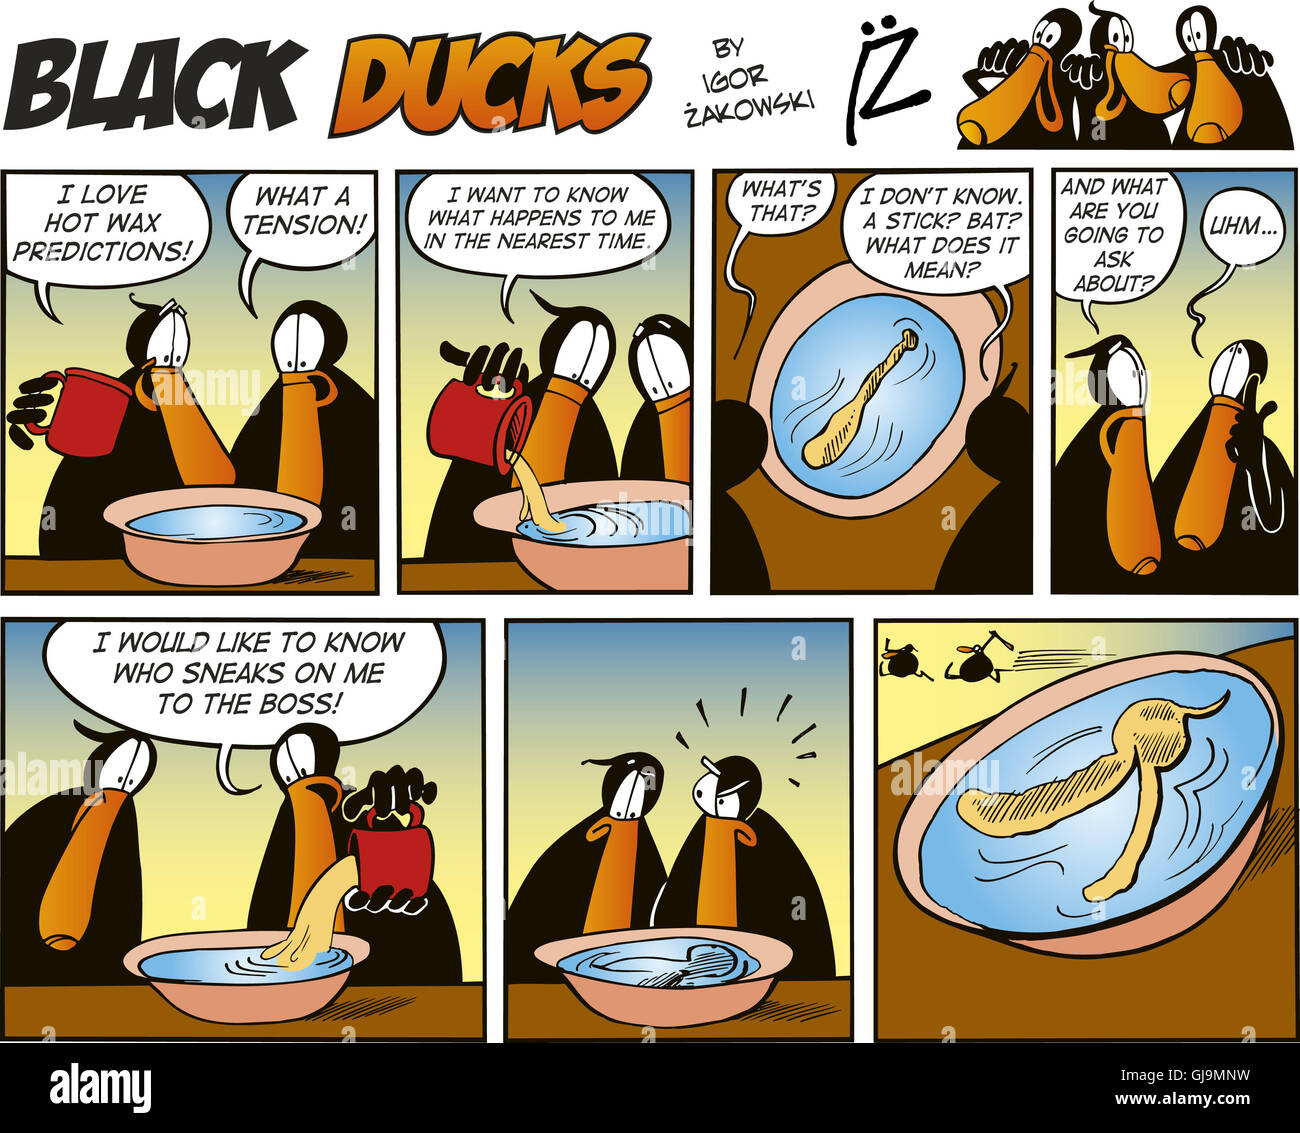 Black Ducks Comics episode 20 Stock Photo